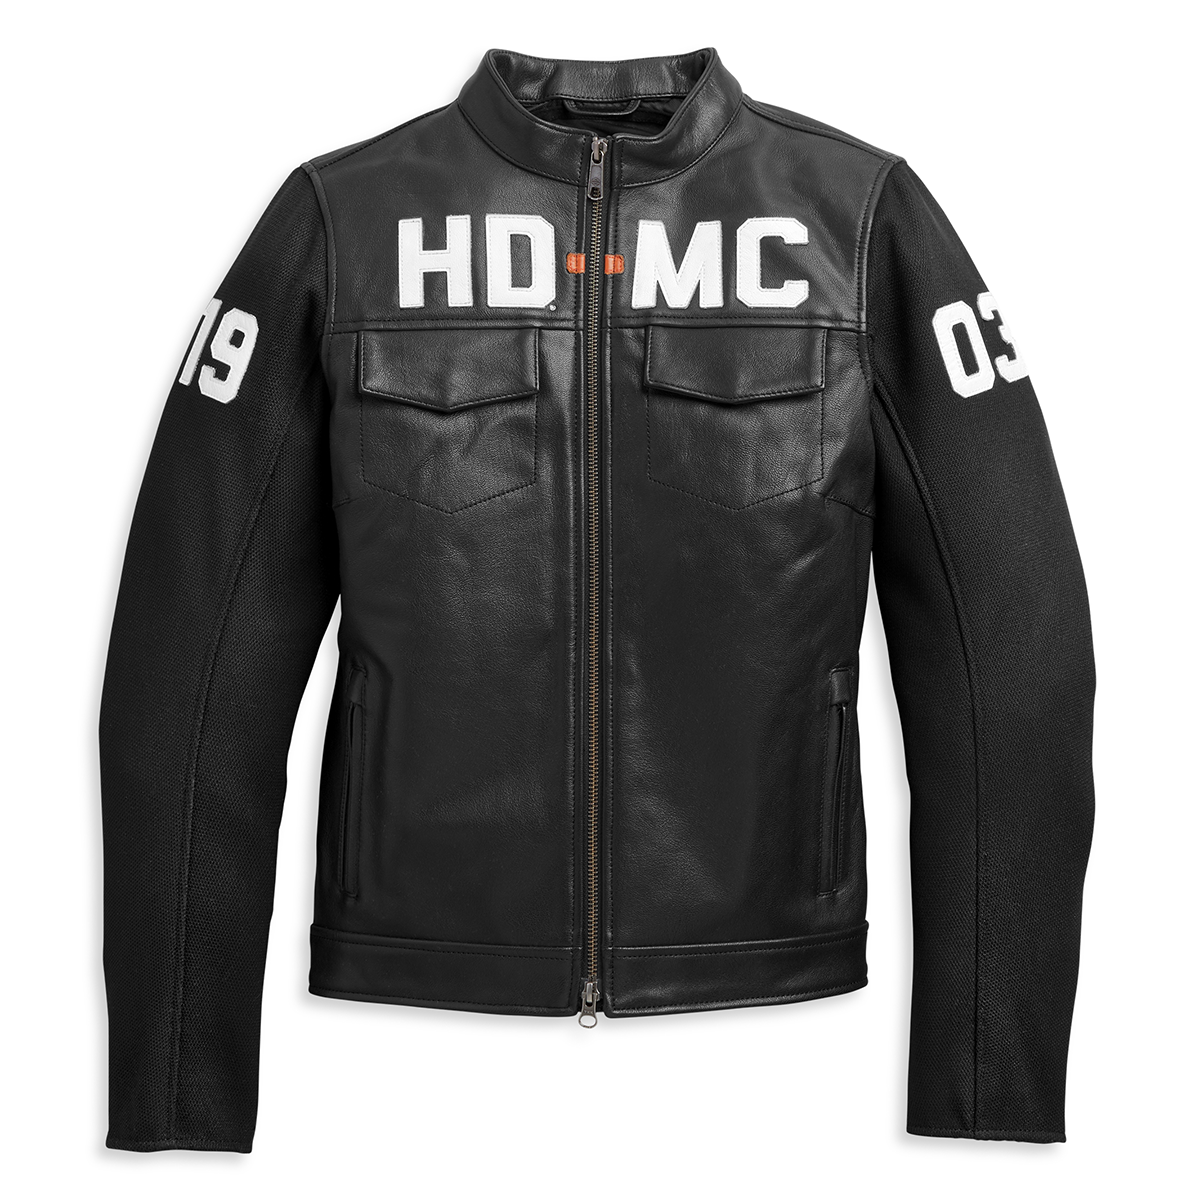 Harley-Davidson HD-MC Mixed Media Women's Bomber Jacket 97018-21VW